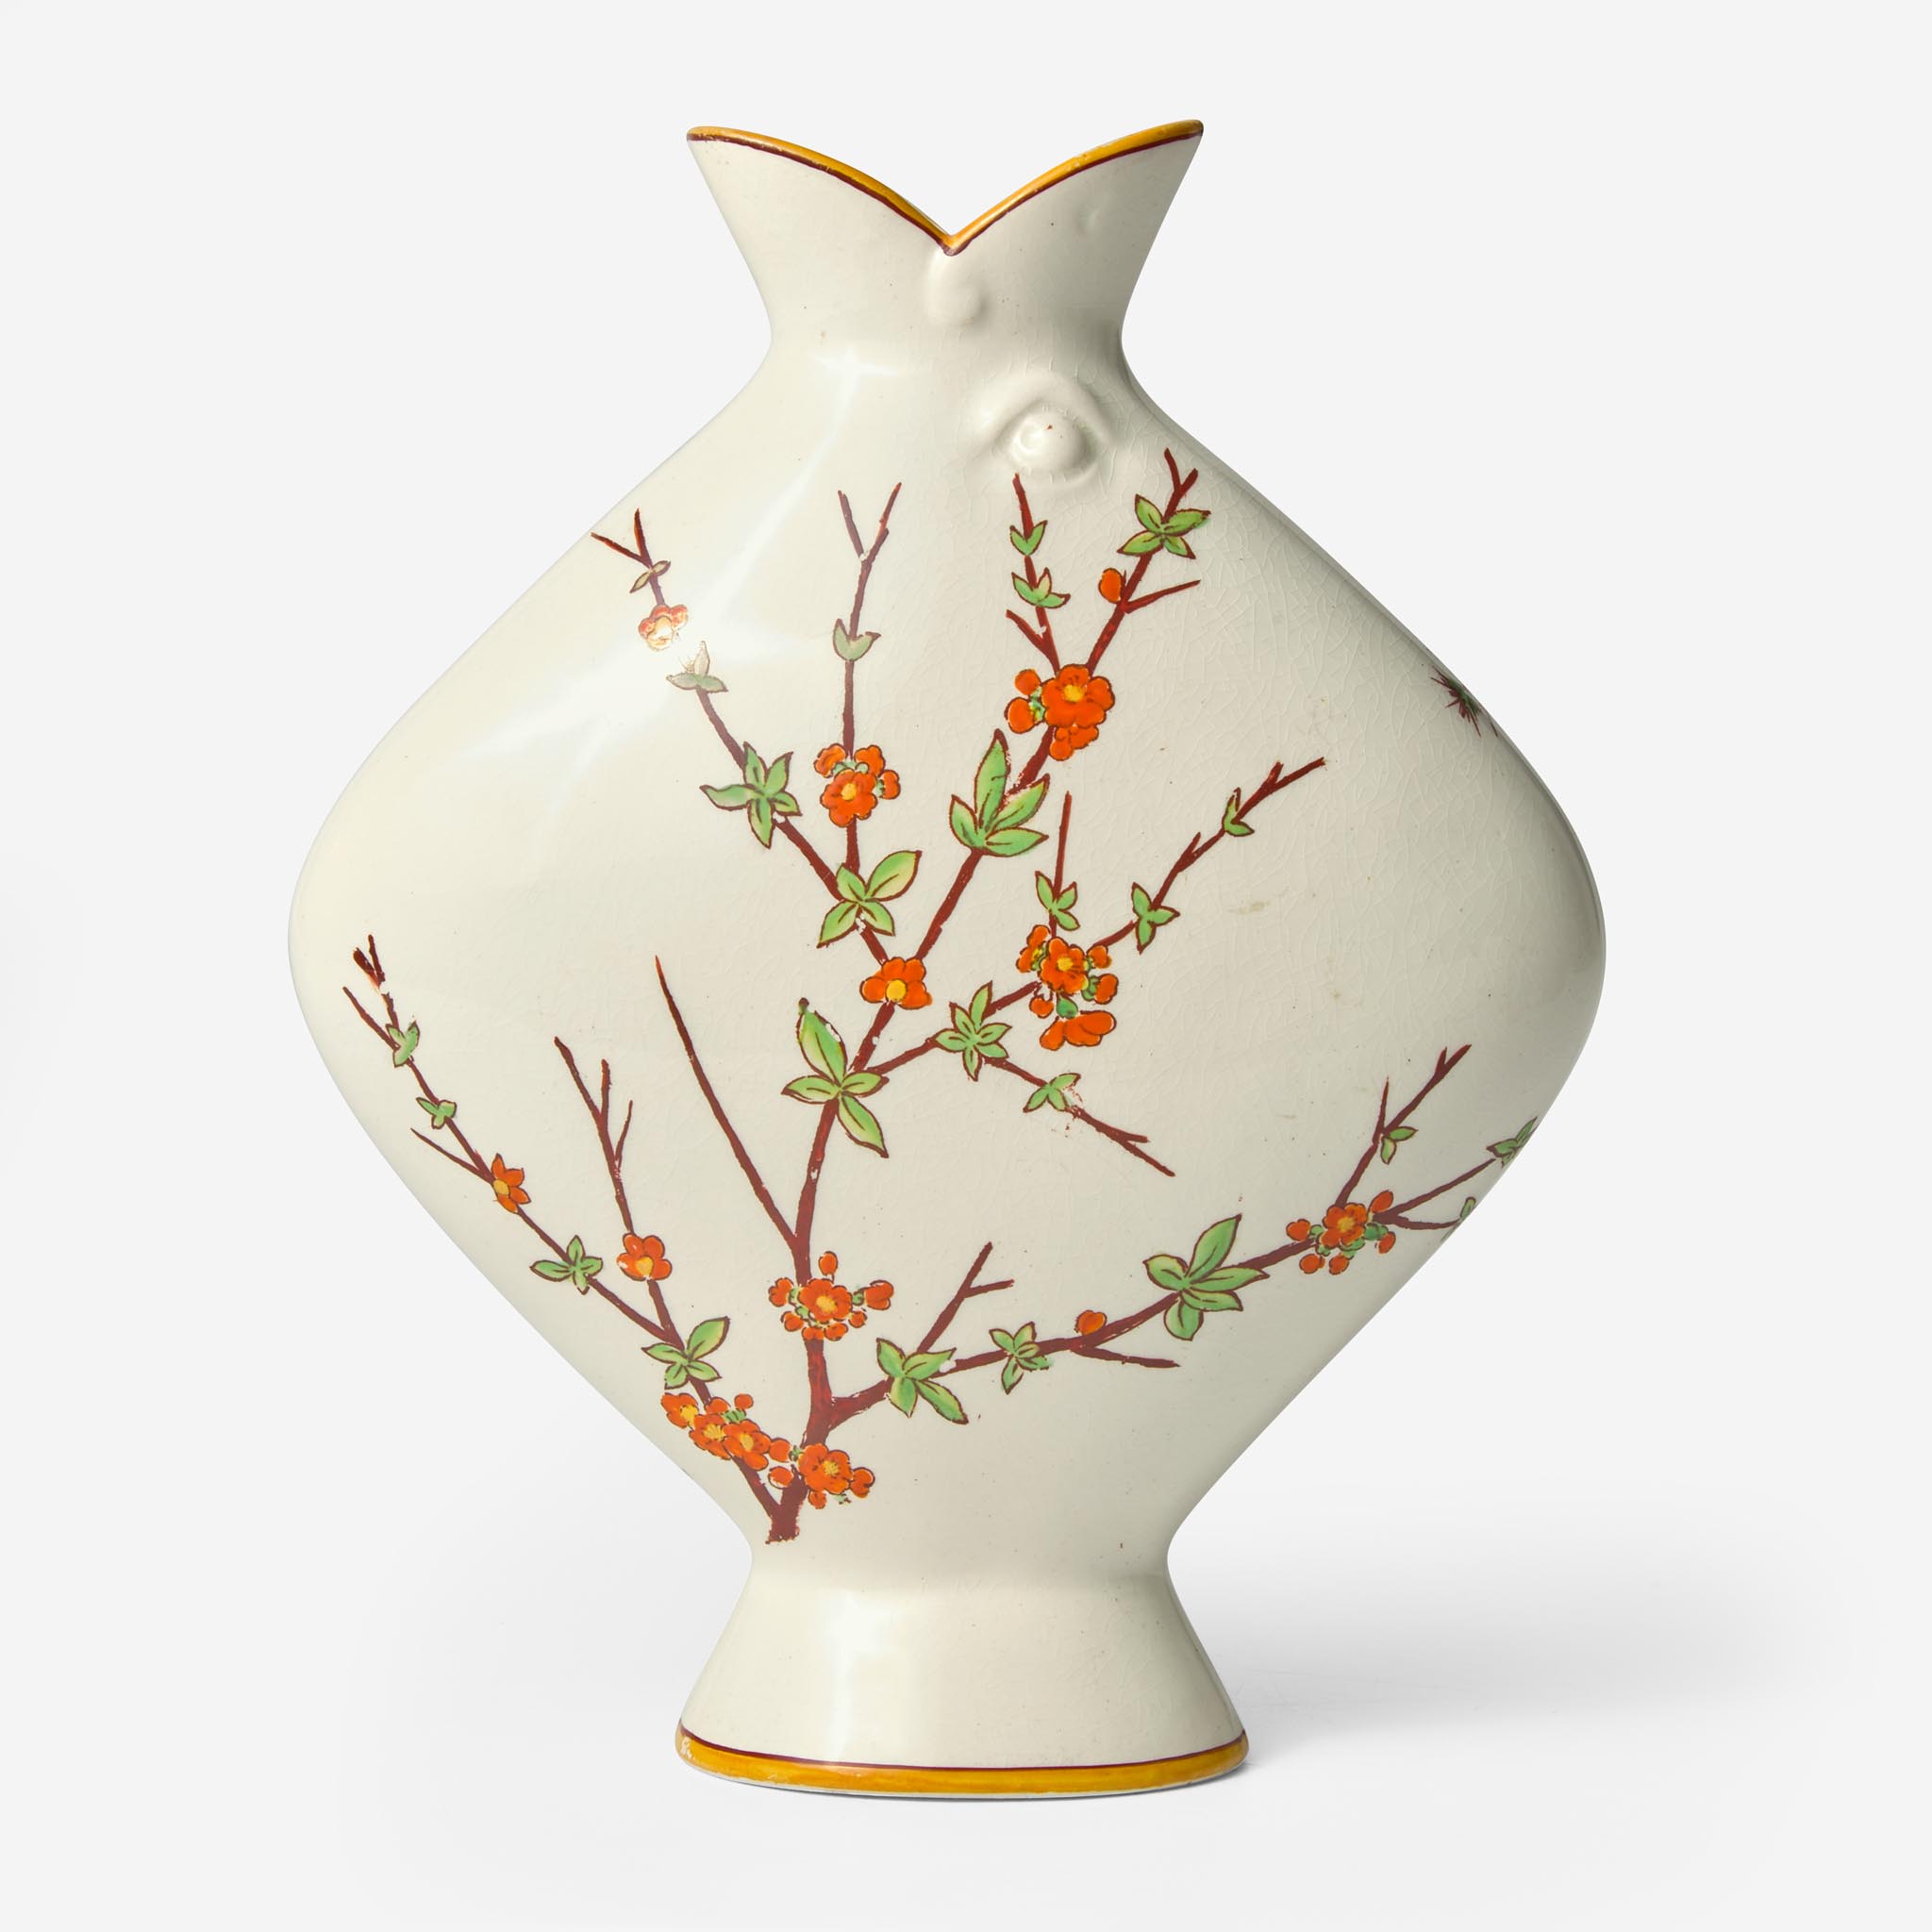 A Wedgwood Christopher Dresser (1834-1904) Designed Queensware Fish Vase UK, 1870s